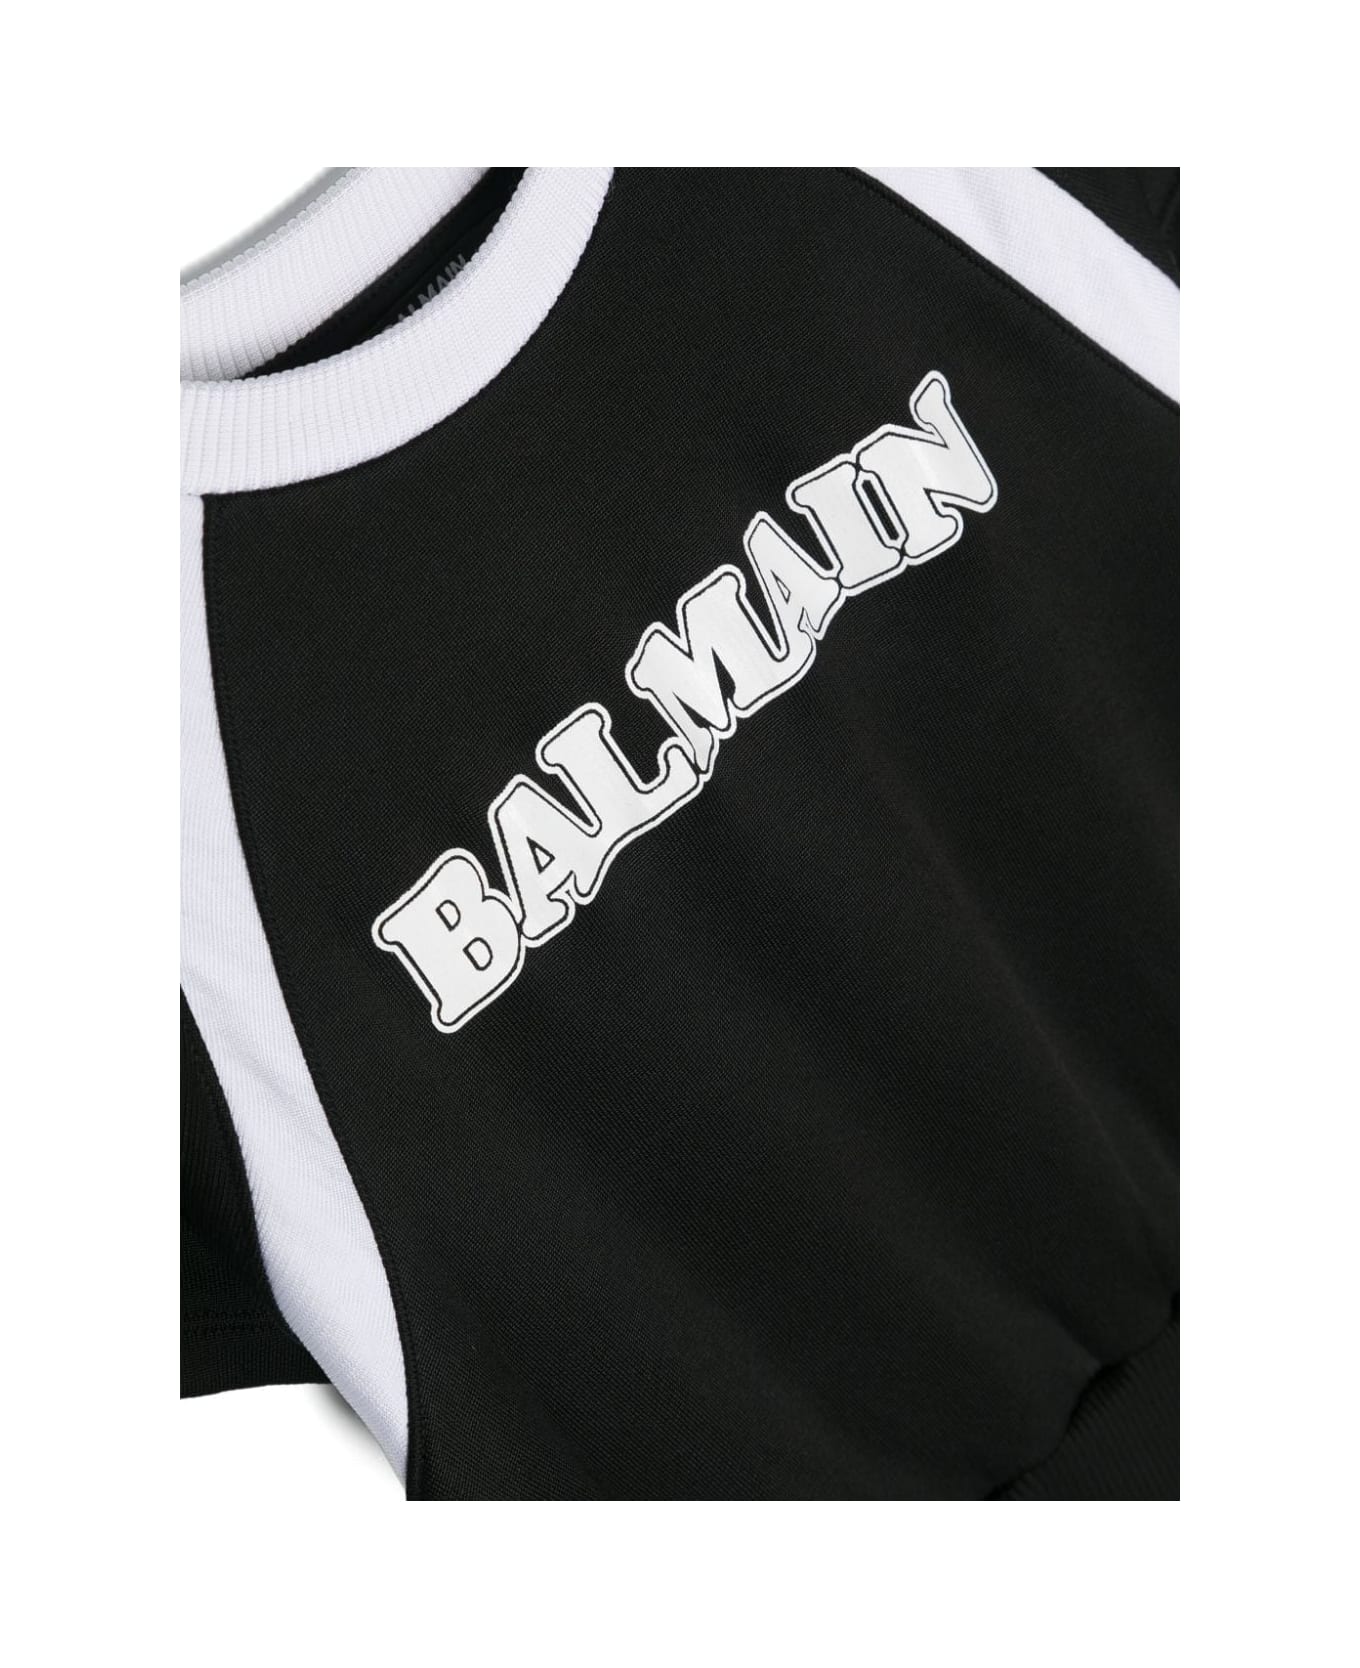 Balmain Abito Con Logo - BLACK スーツ